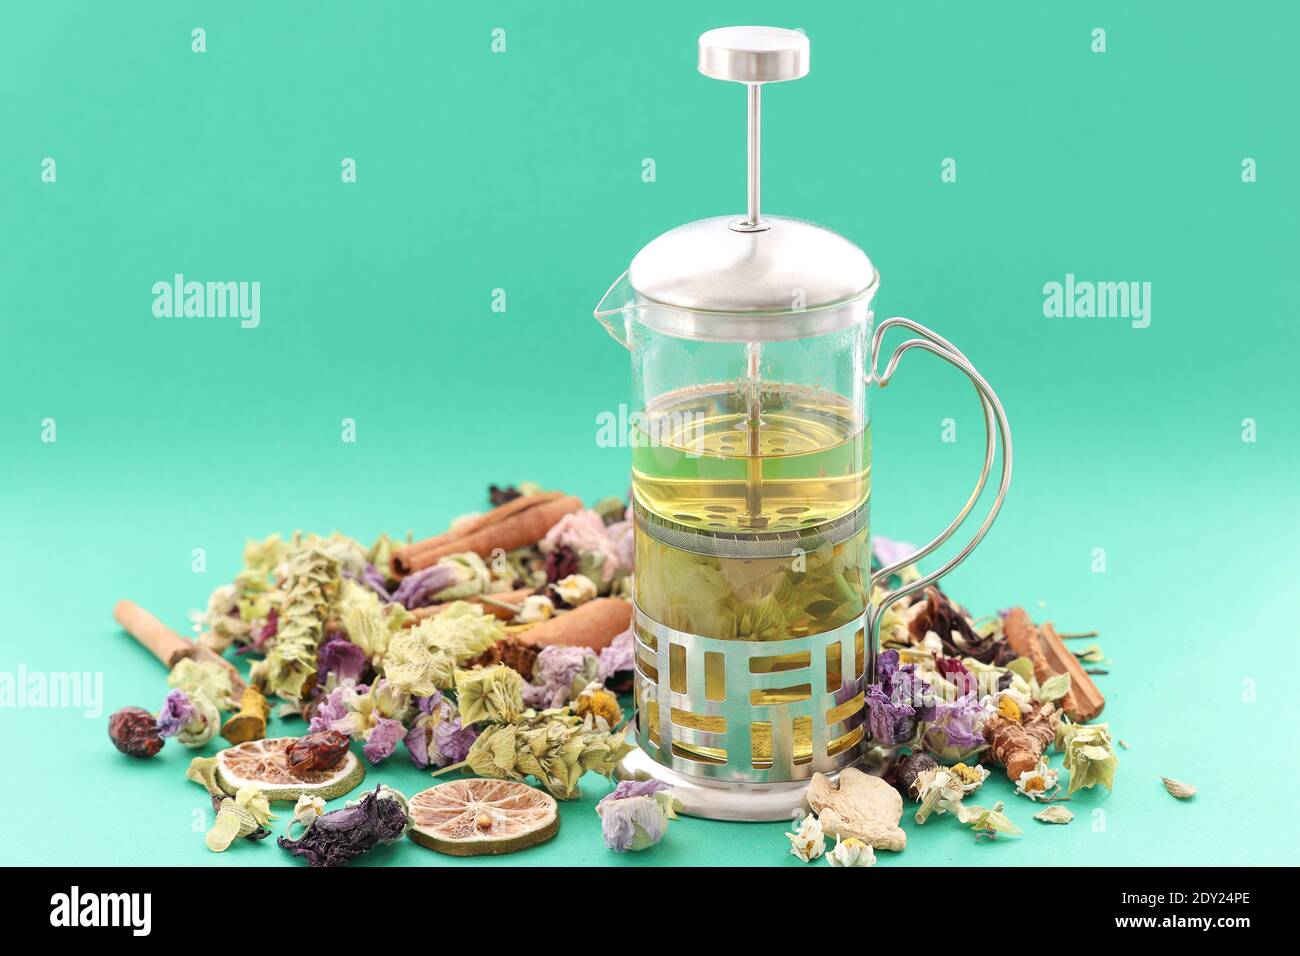 Filtro de té fotografías e imágenes de alta resolución - Alamy